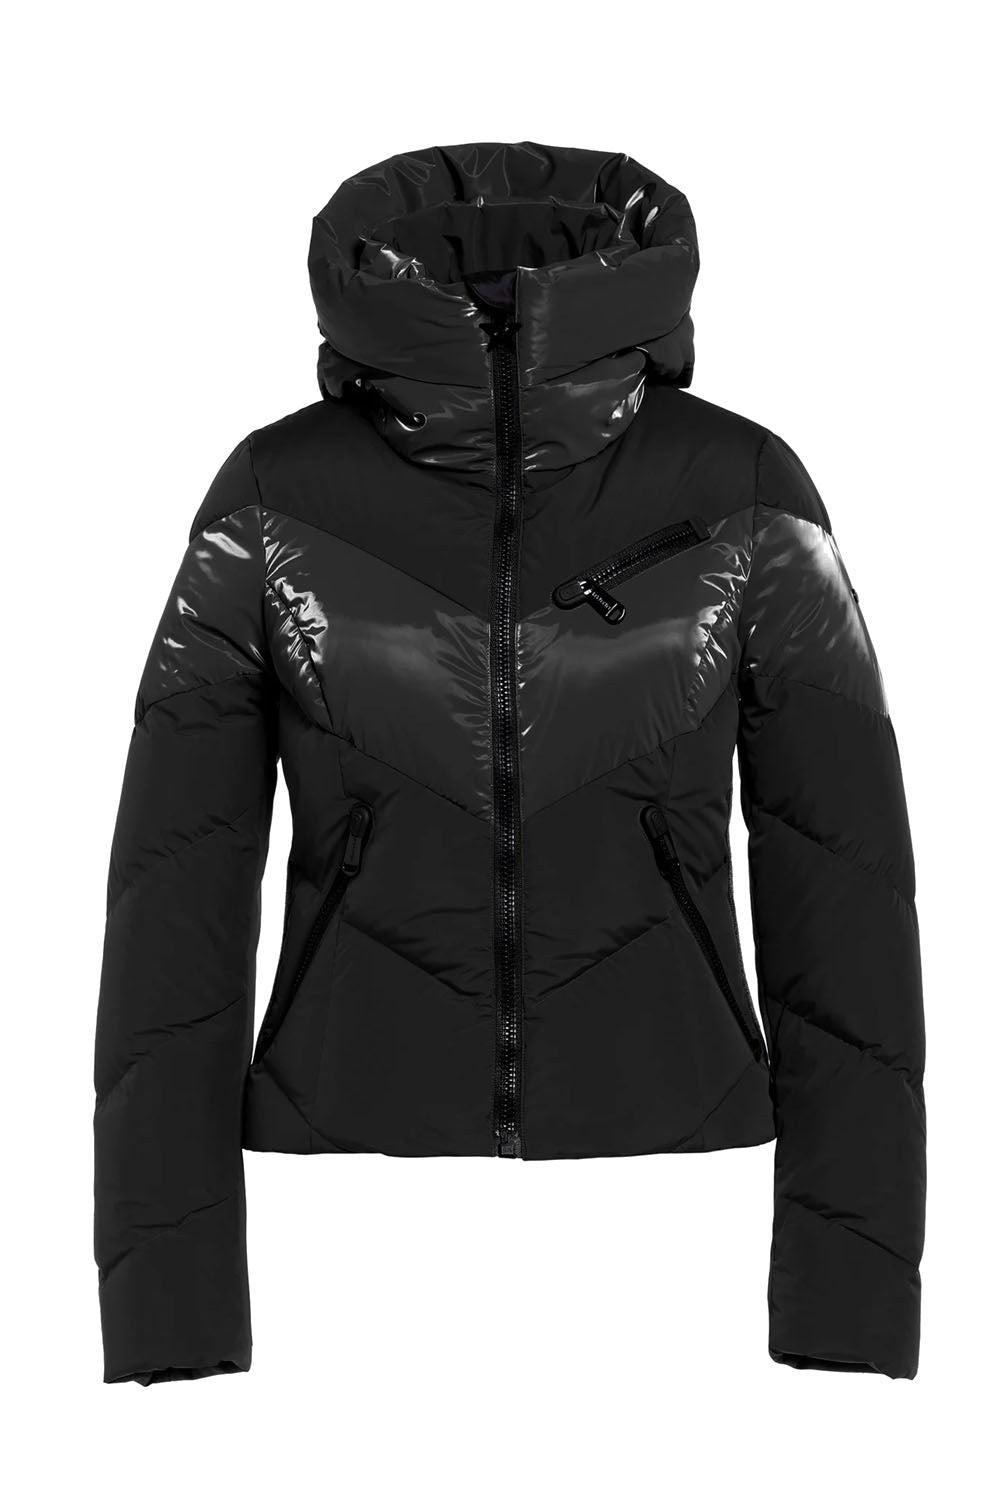 Moraine ski jacket black